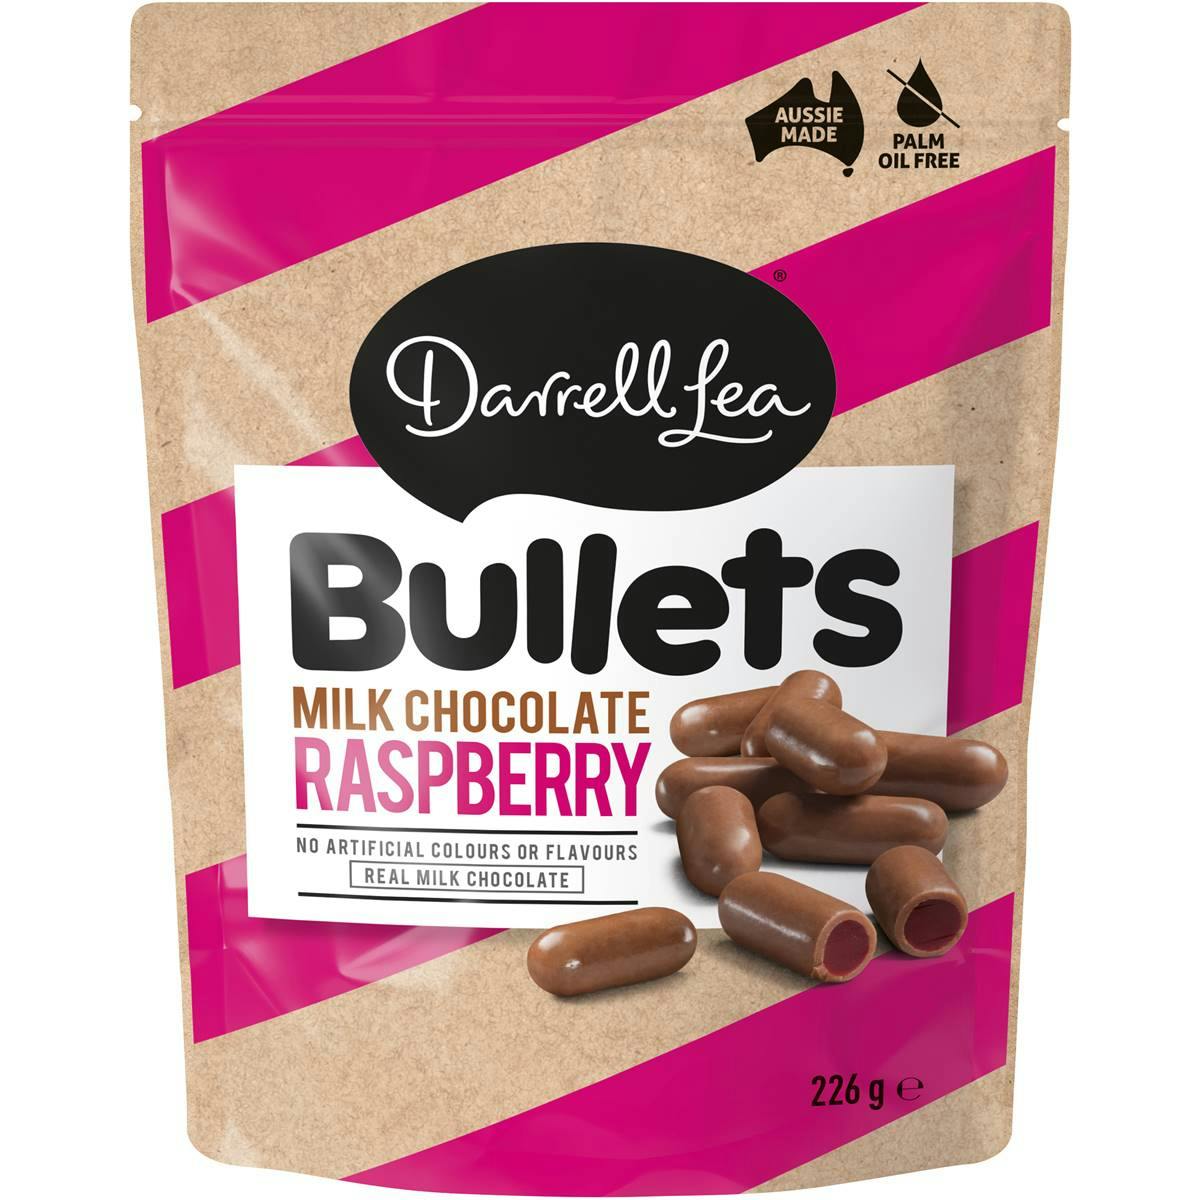 Darrell Lea Milk Chocolate Raspberry Bullets Share Bag